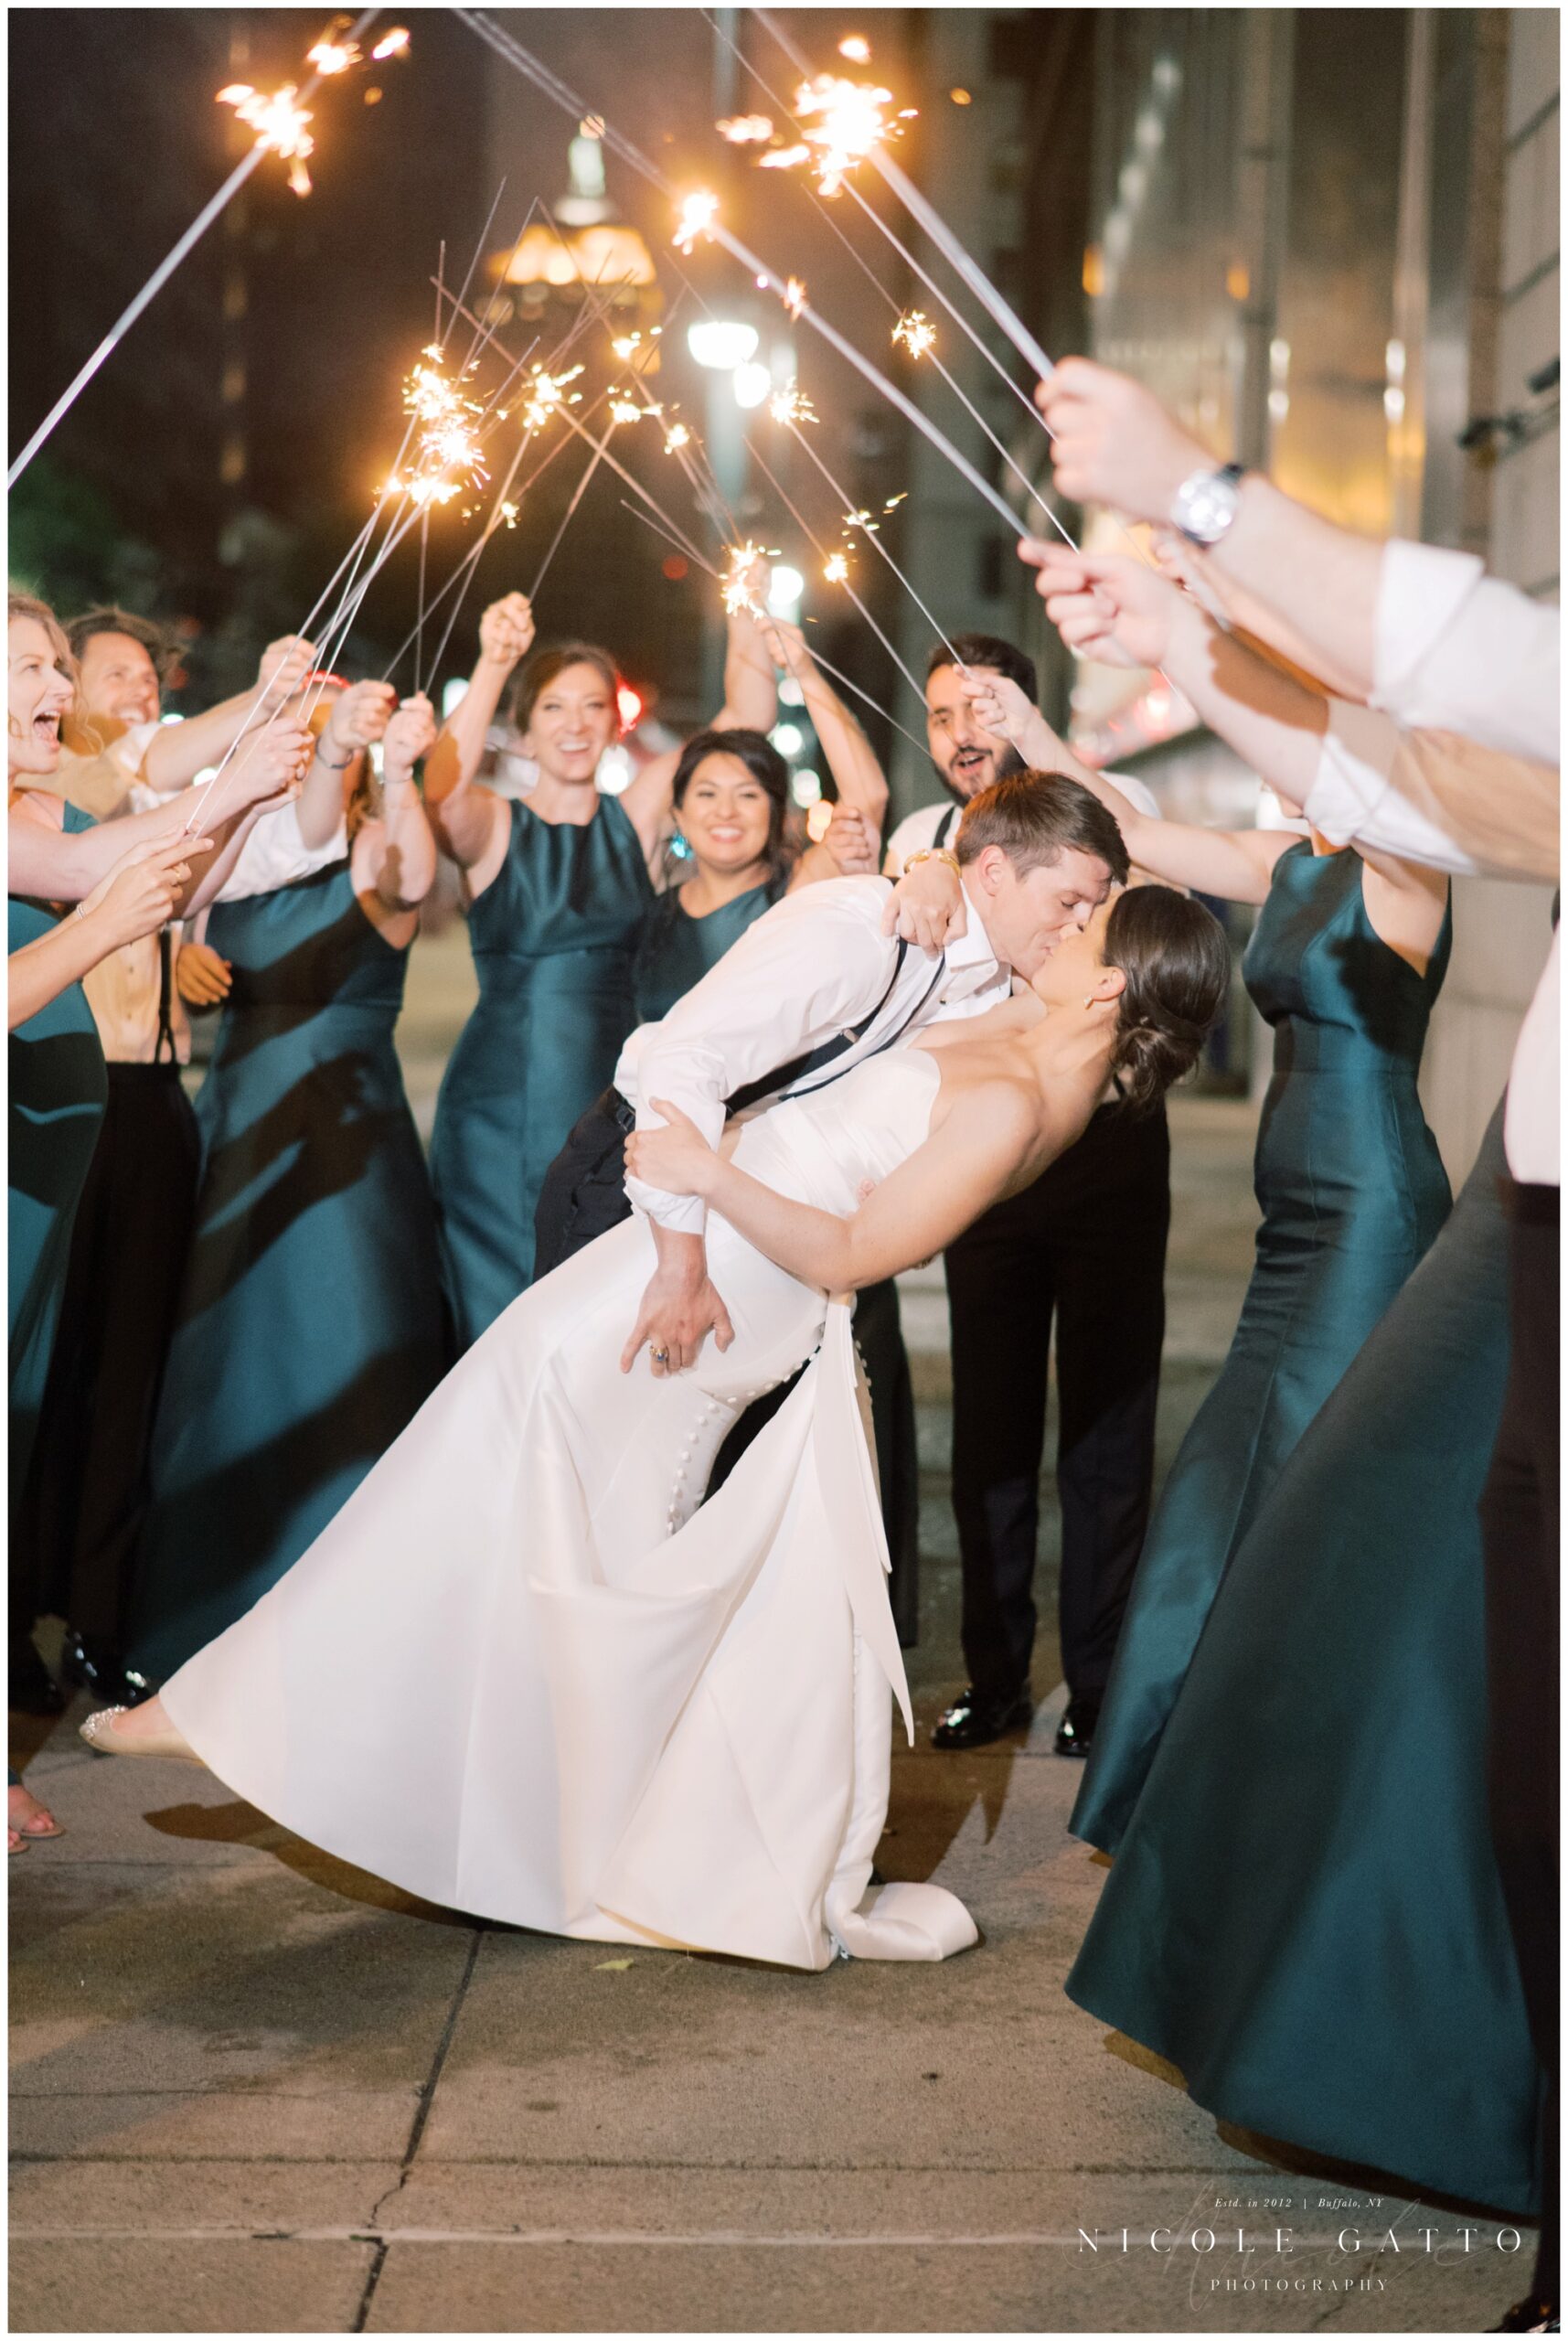 sparkler exit image of bride and groom